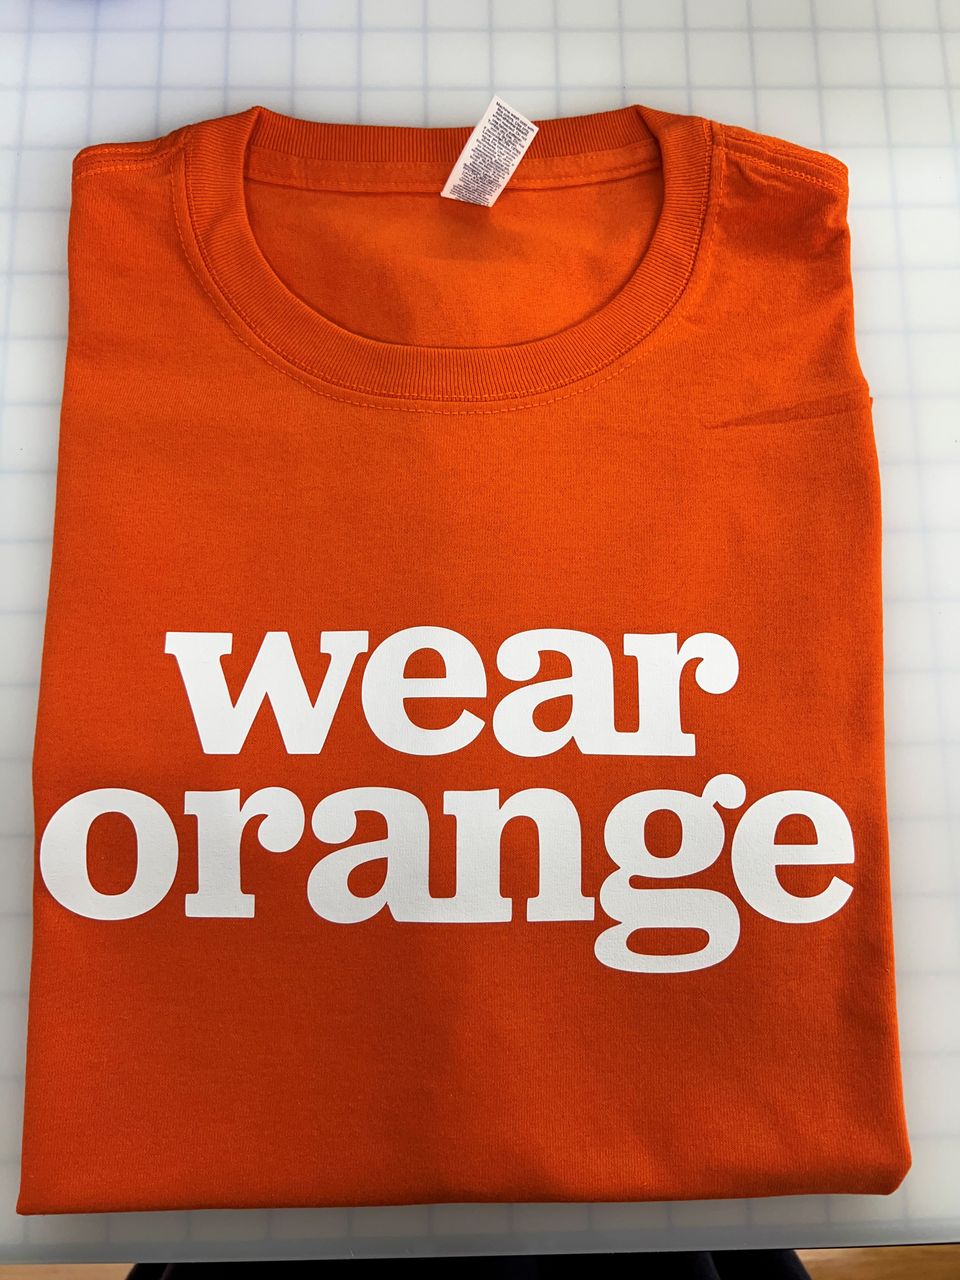 Wear orange front